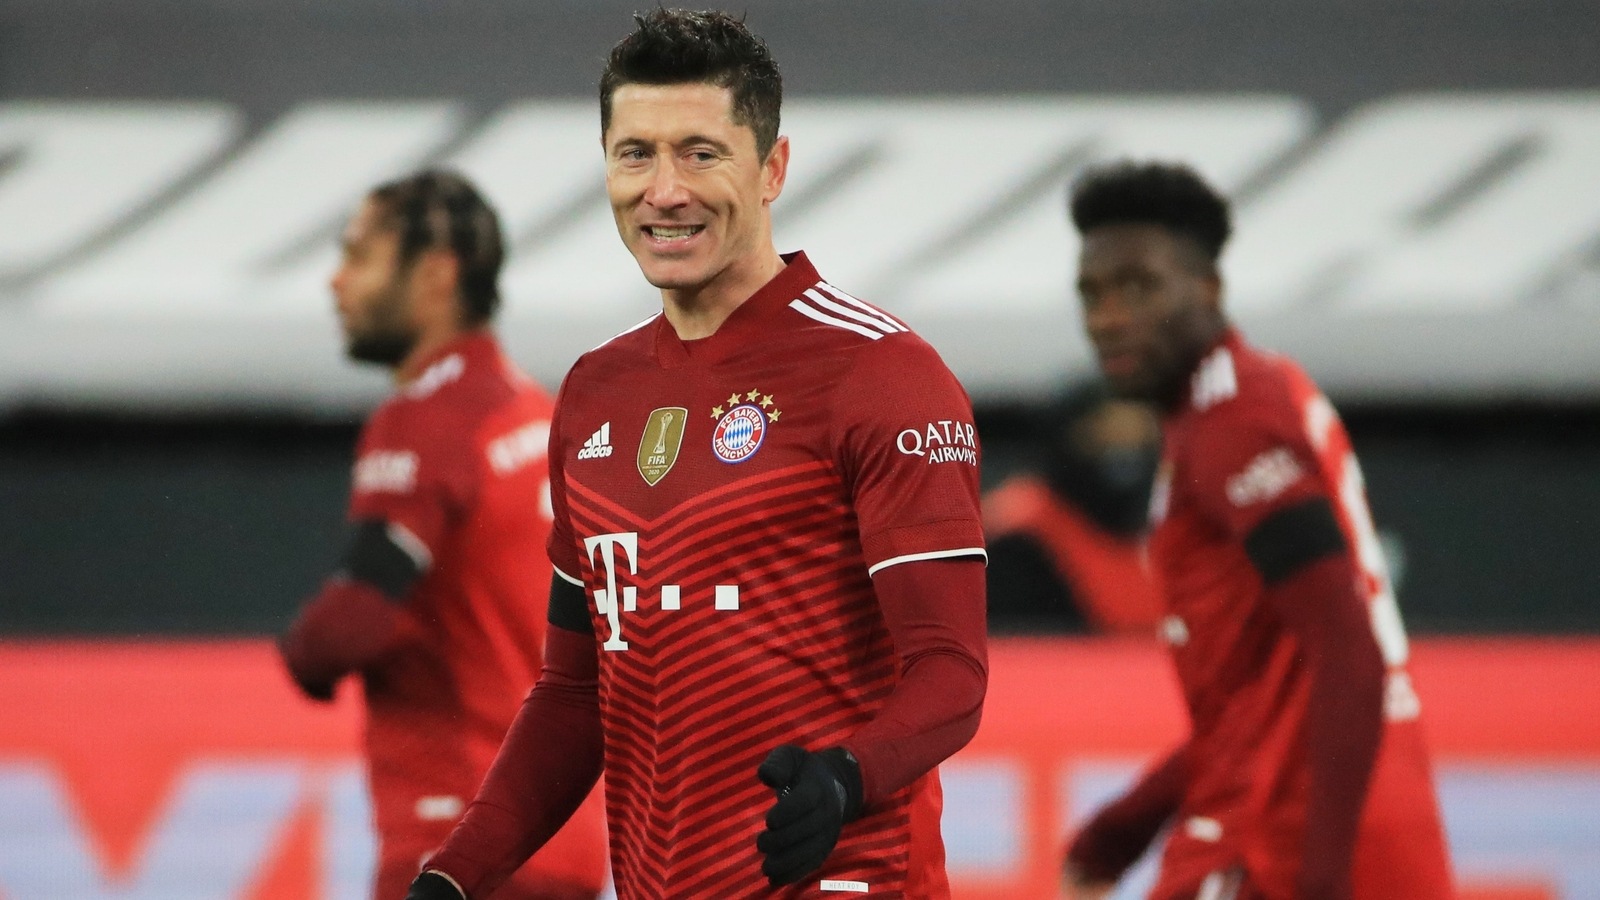 Robert Lewandowski wants to leave Bayern, says club’s sports director